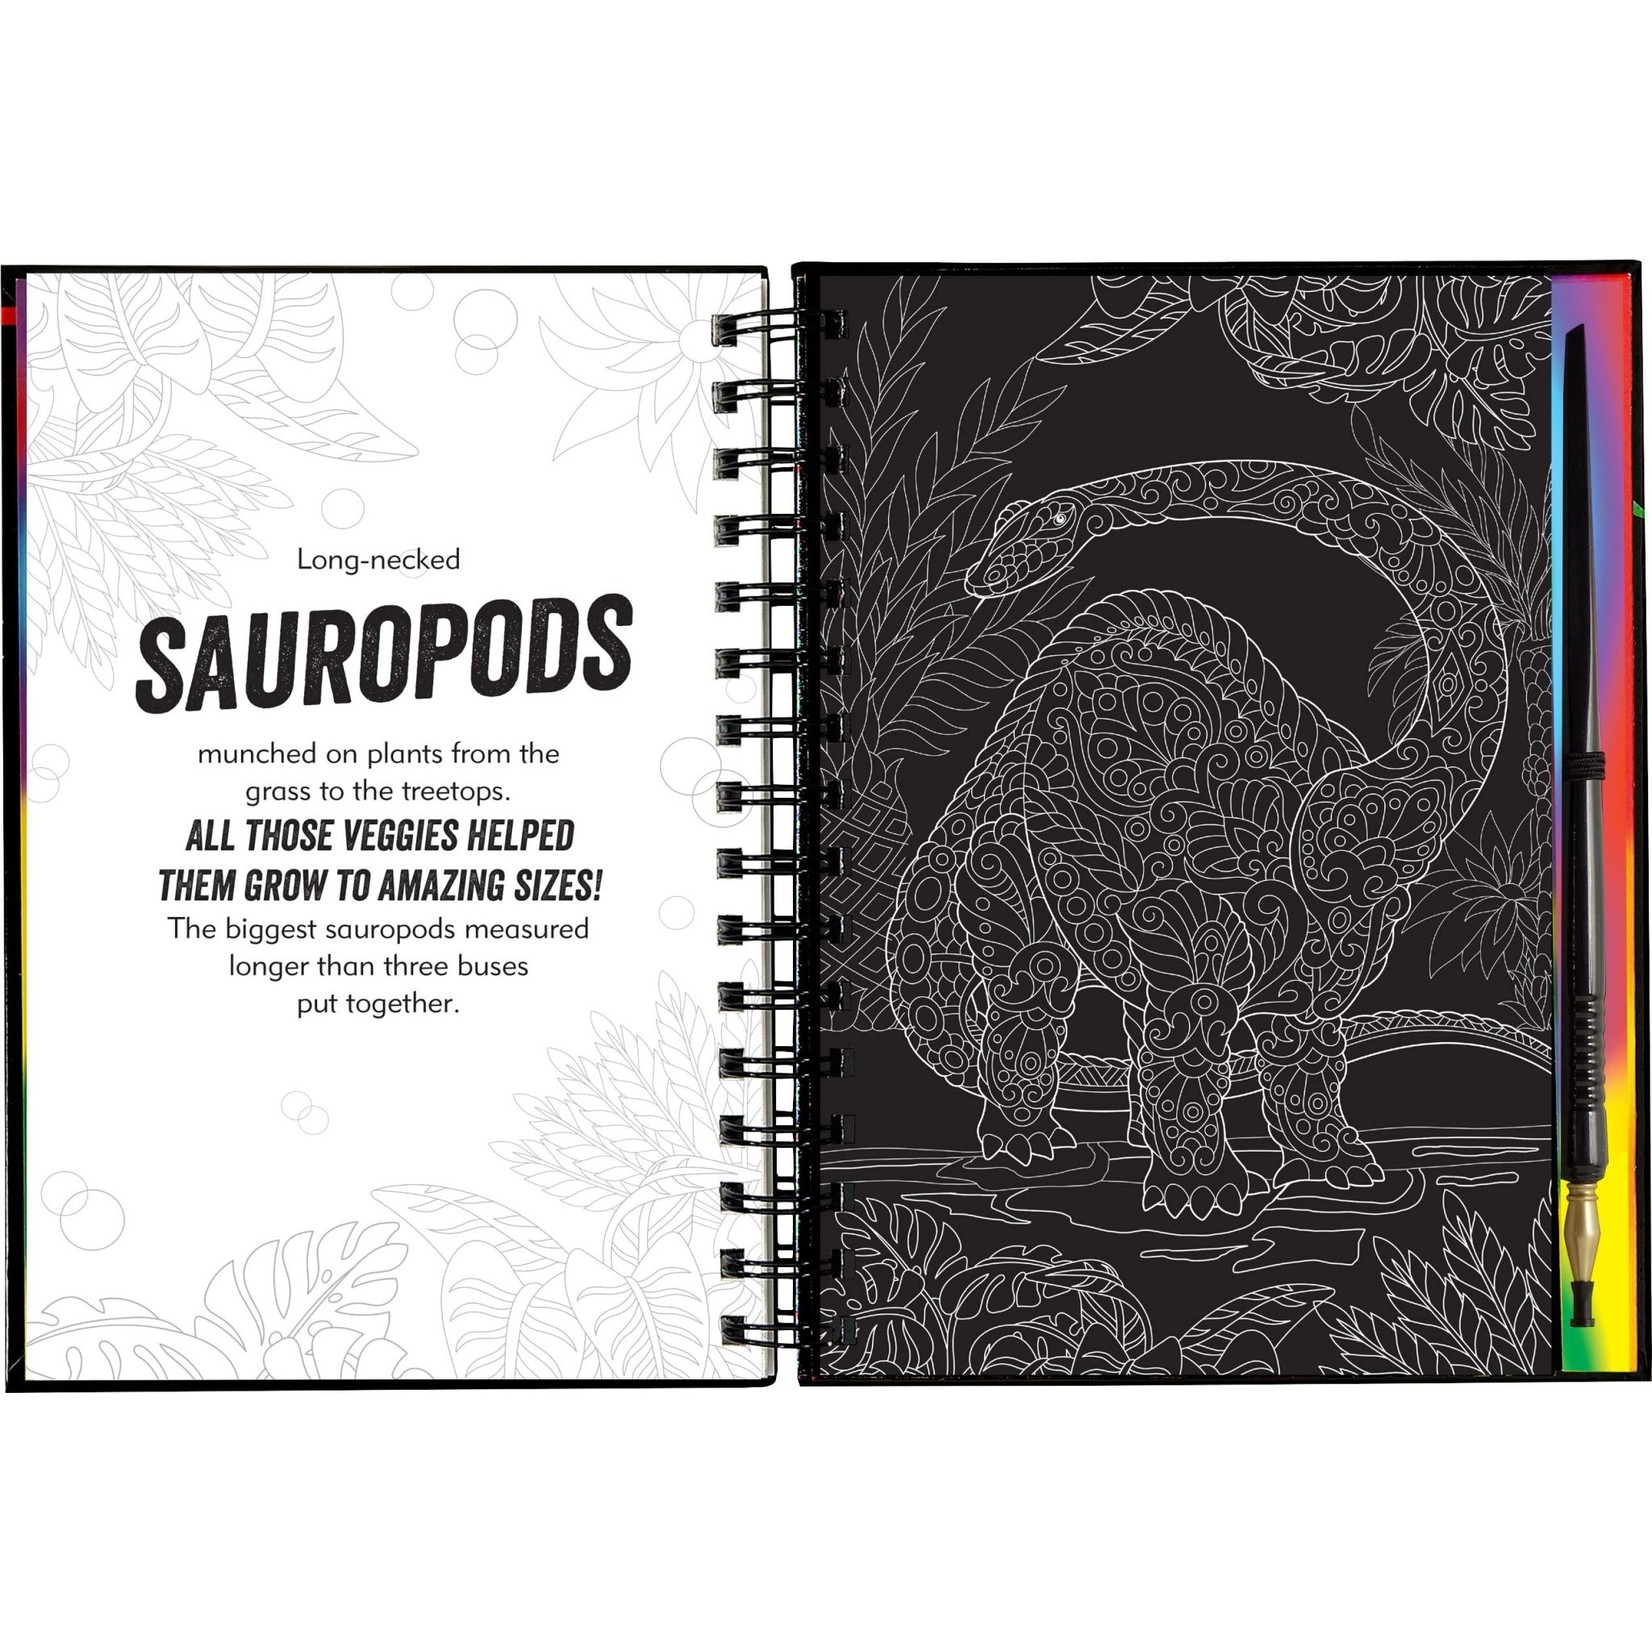 Peter Pauper Press Scratch & Sketch, Extreme Dinosaurs